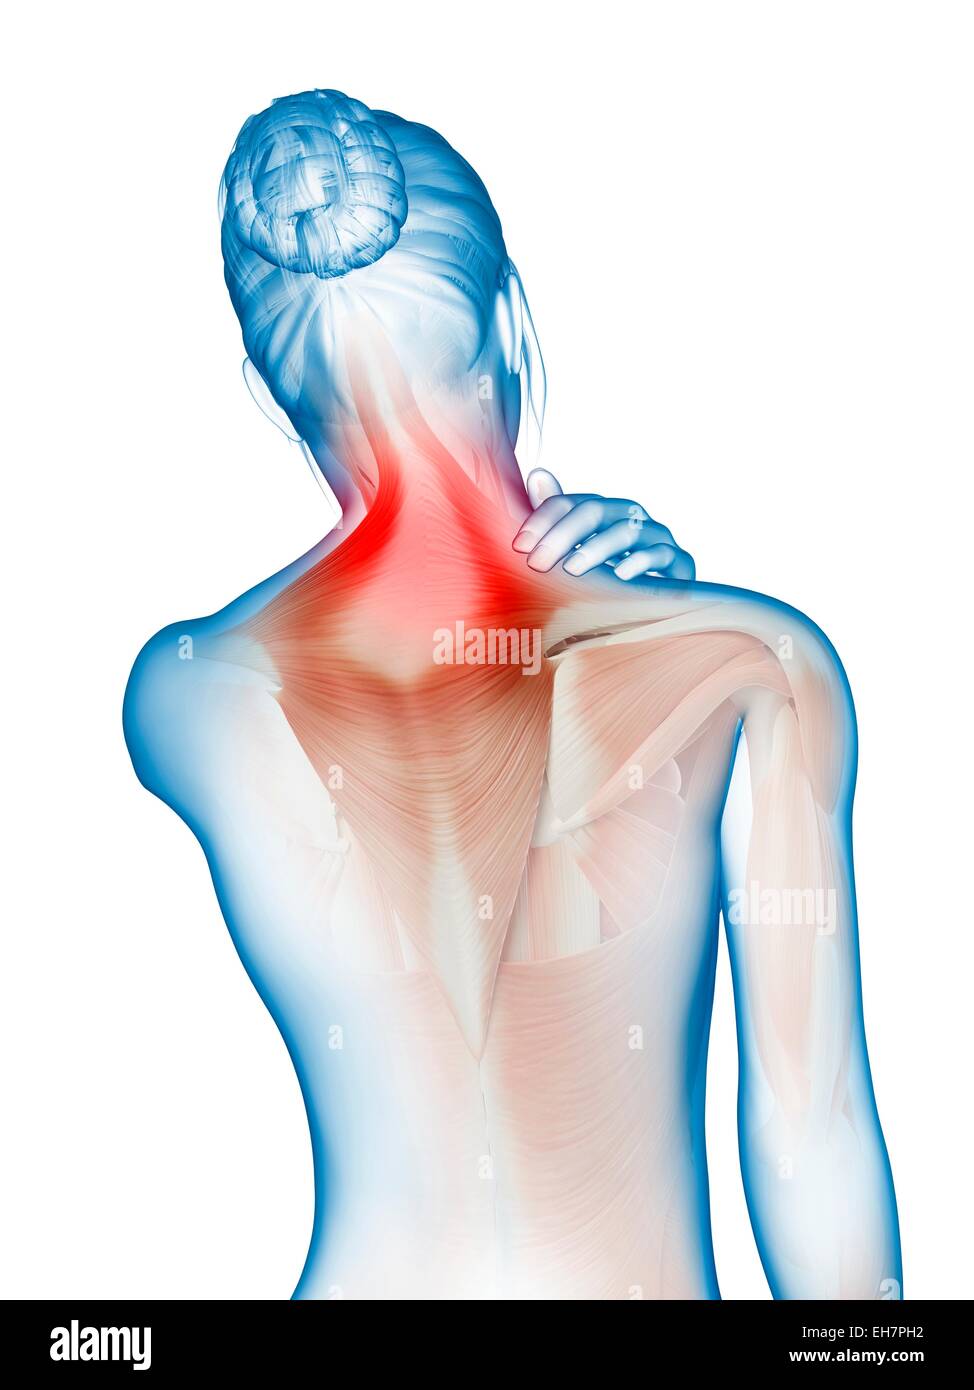 Human neck muscles, illustration Stock Photo